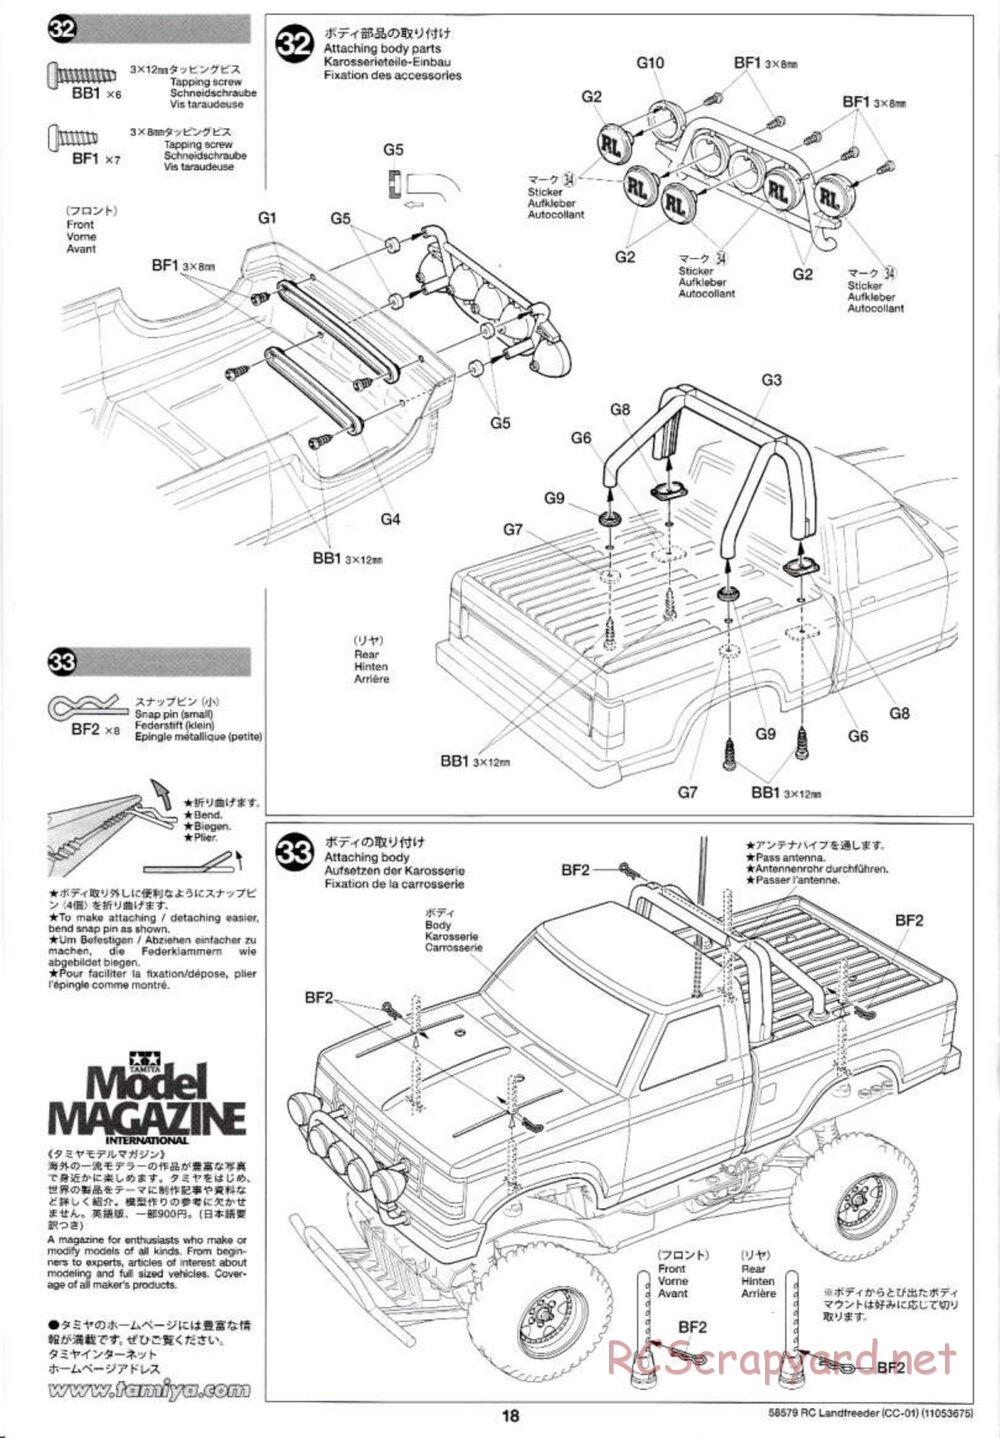 Tamiya - LandFreeder - CC-01 Chassis - Manual - Page 18